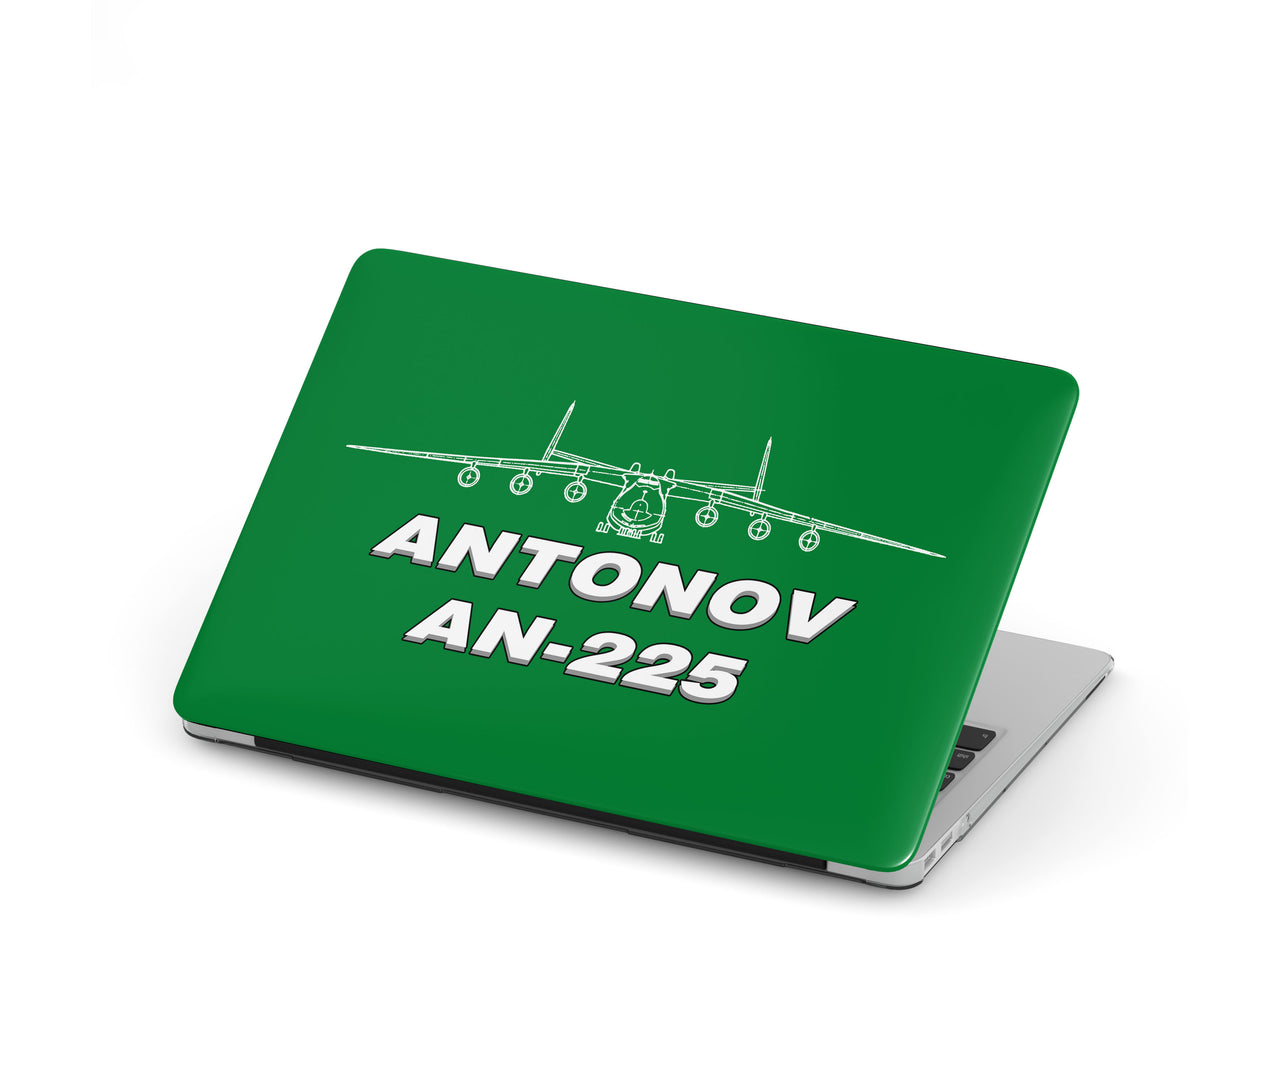 Antonov AN-225 (26) Designed Macbook Cases